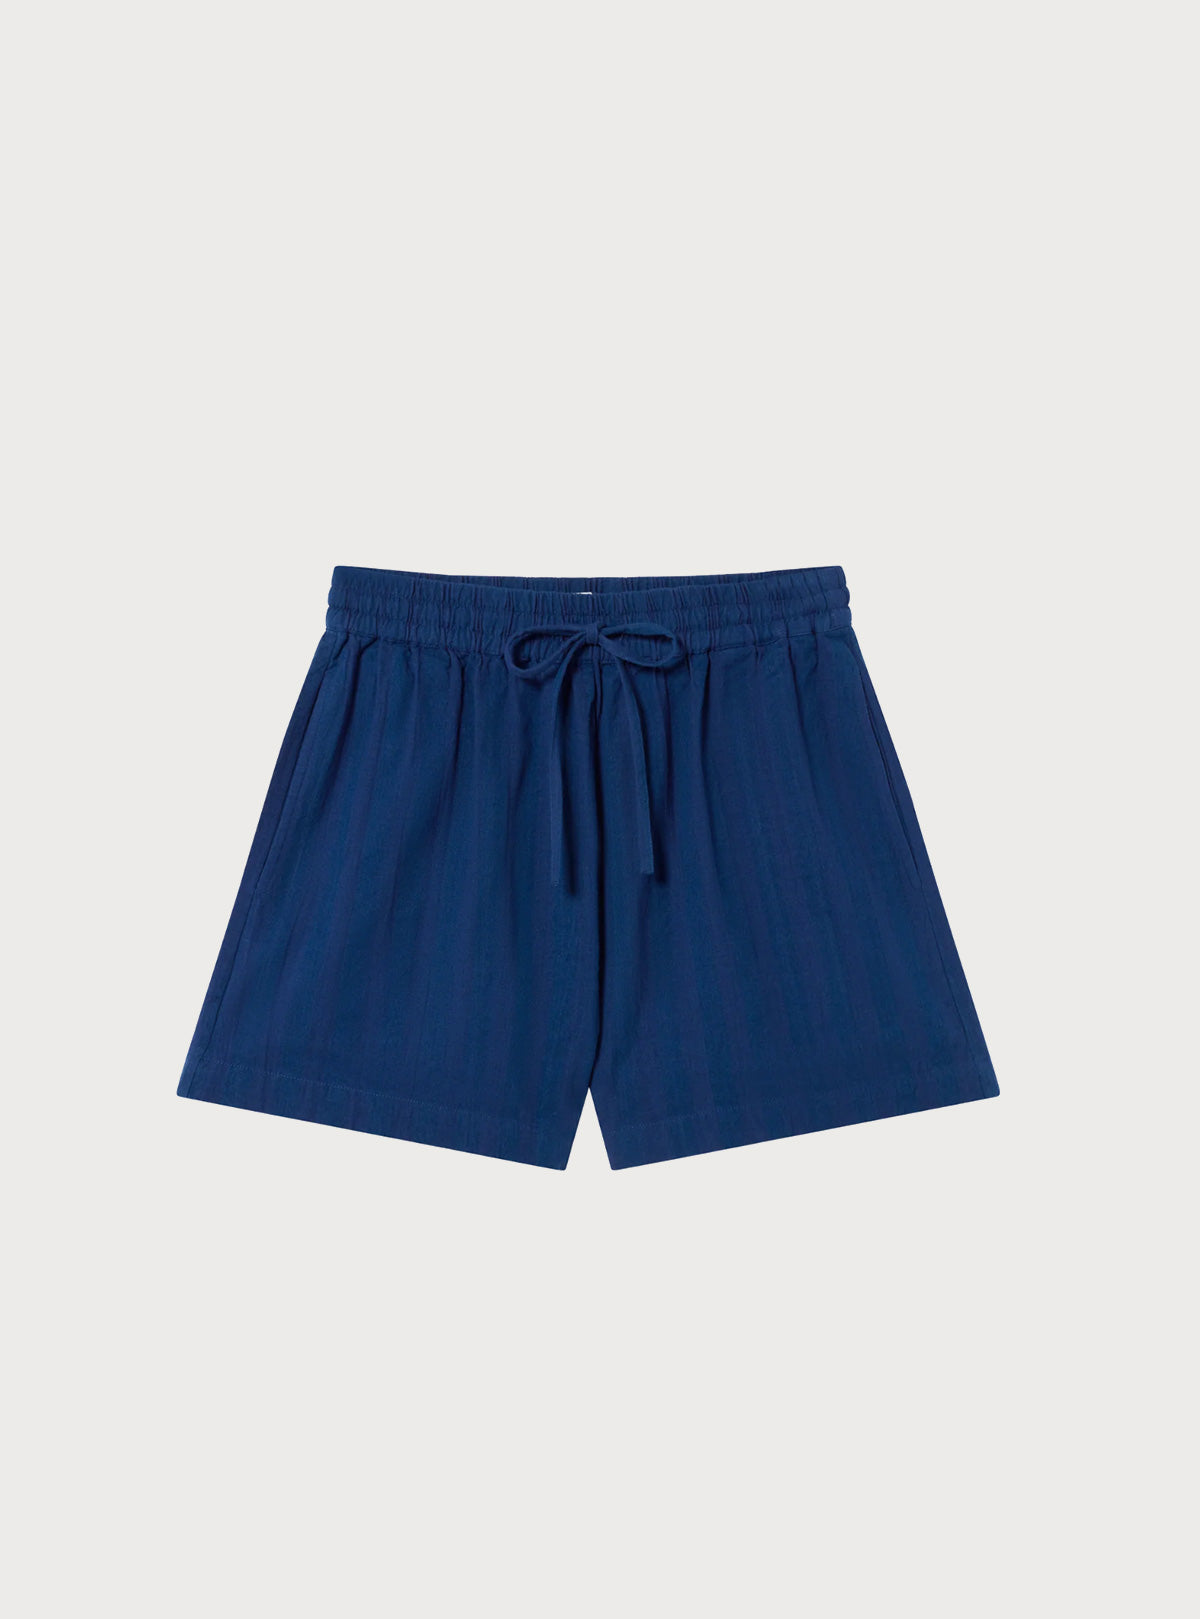 Thinking Mu - Geranio Shorts - Blue